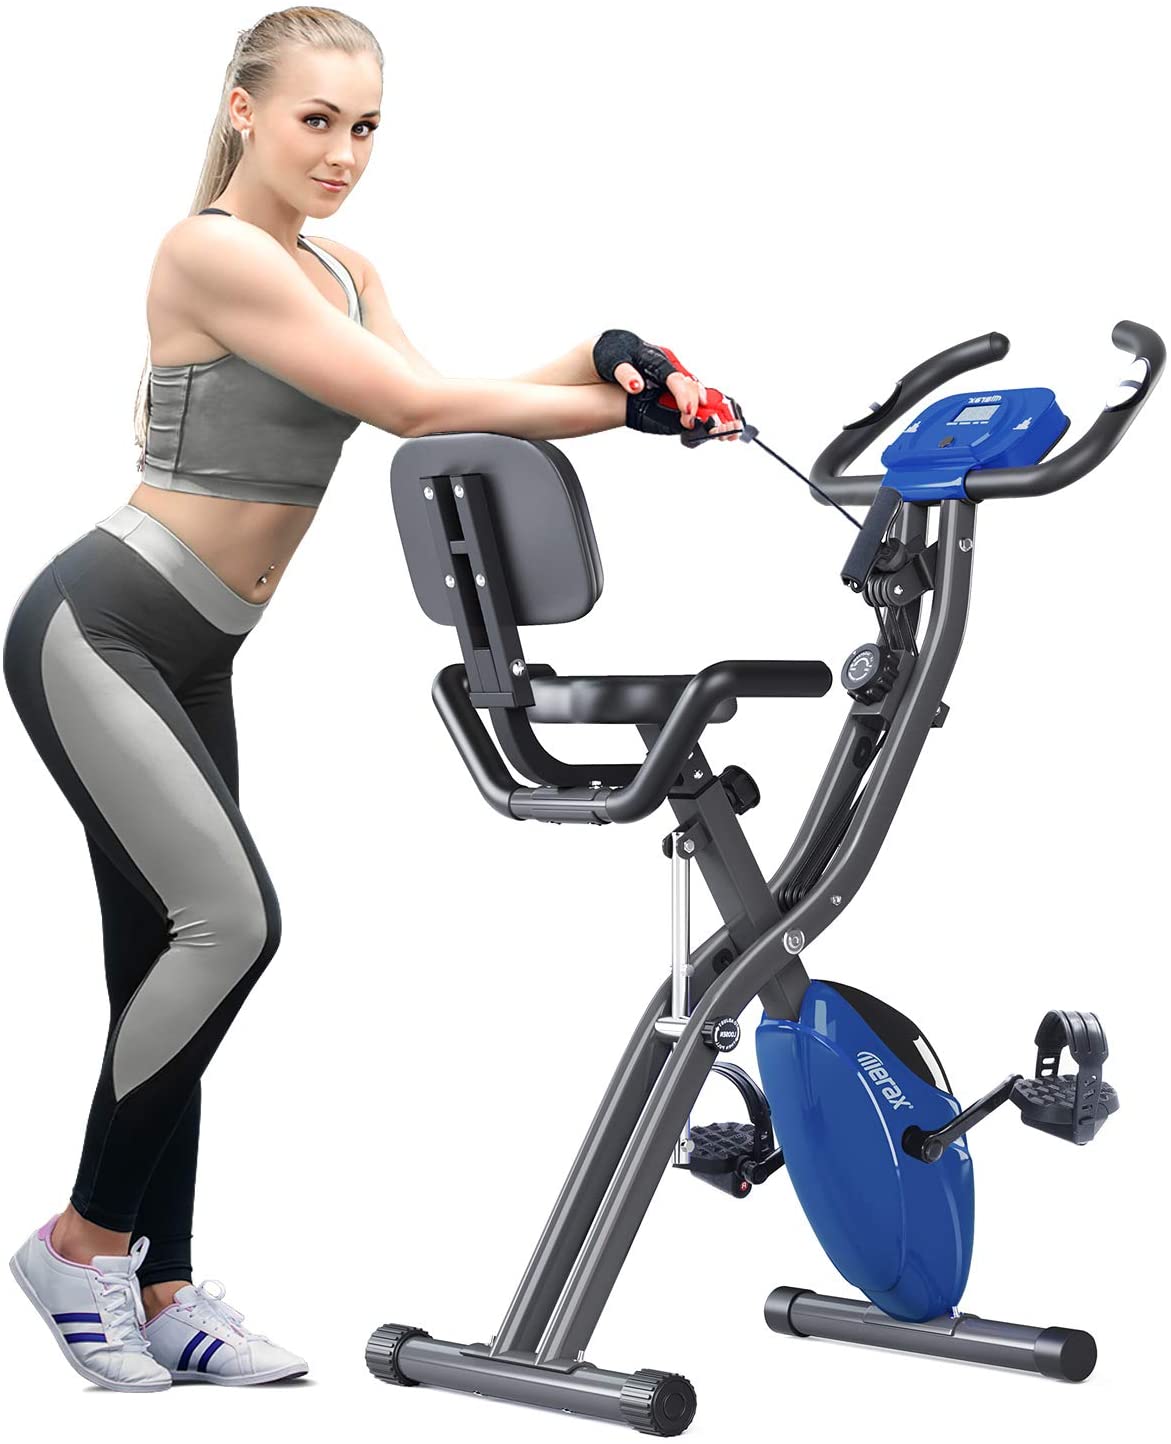 Blue Folding Exercise Bike, Sports Home Fitness Upright Recumbent X-Bike with 10-Level Adjustable Resistance - image 5 of 6